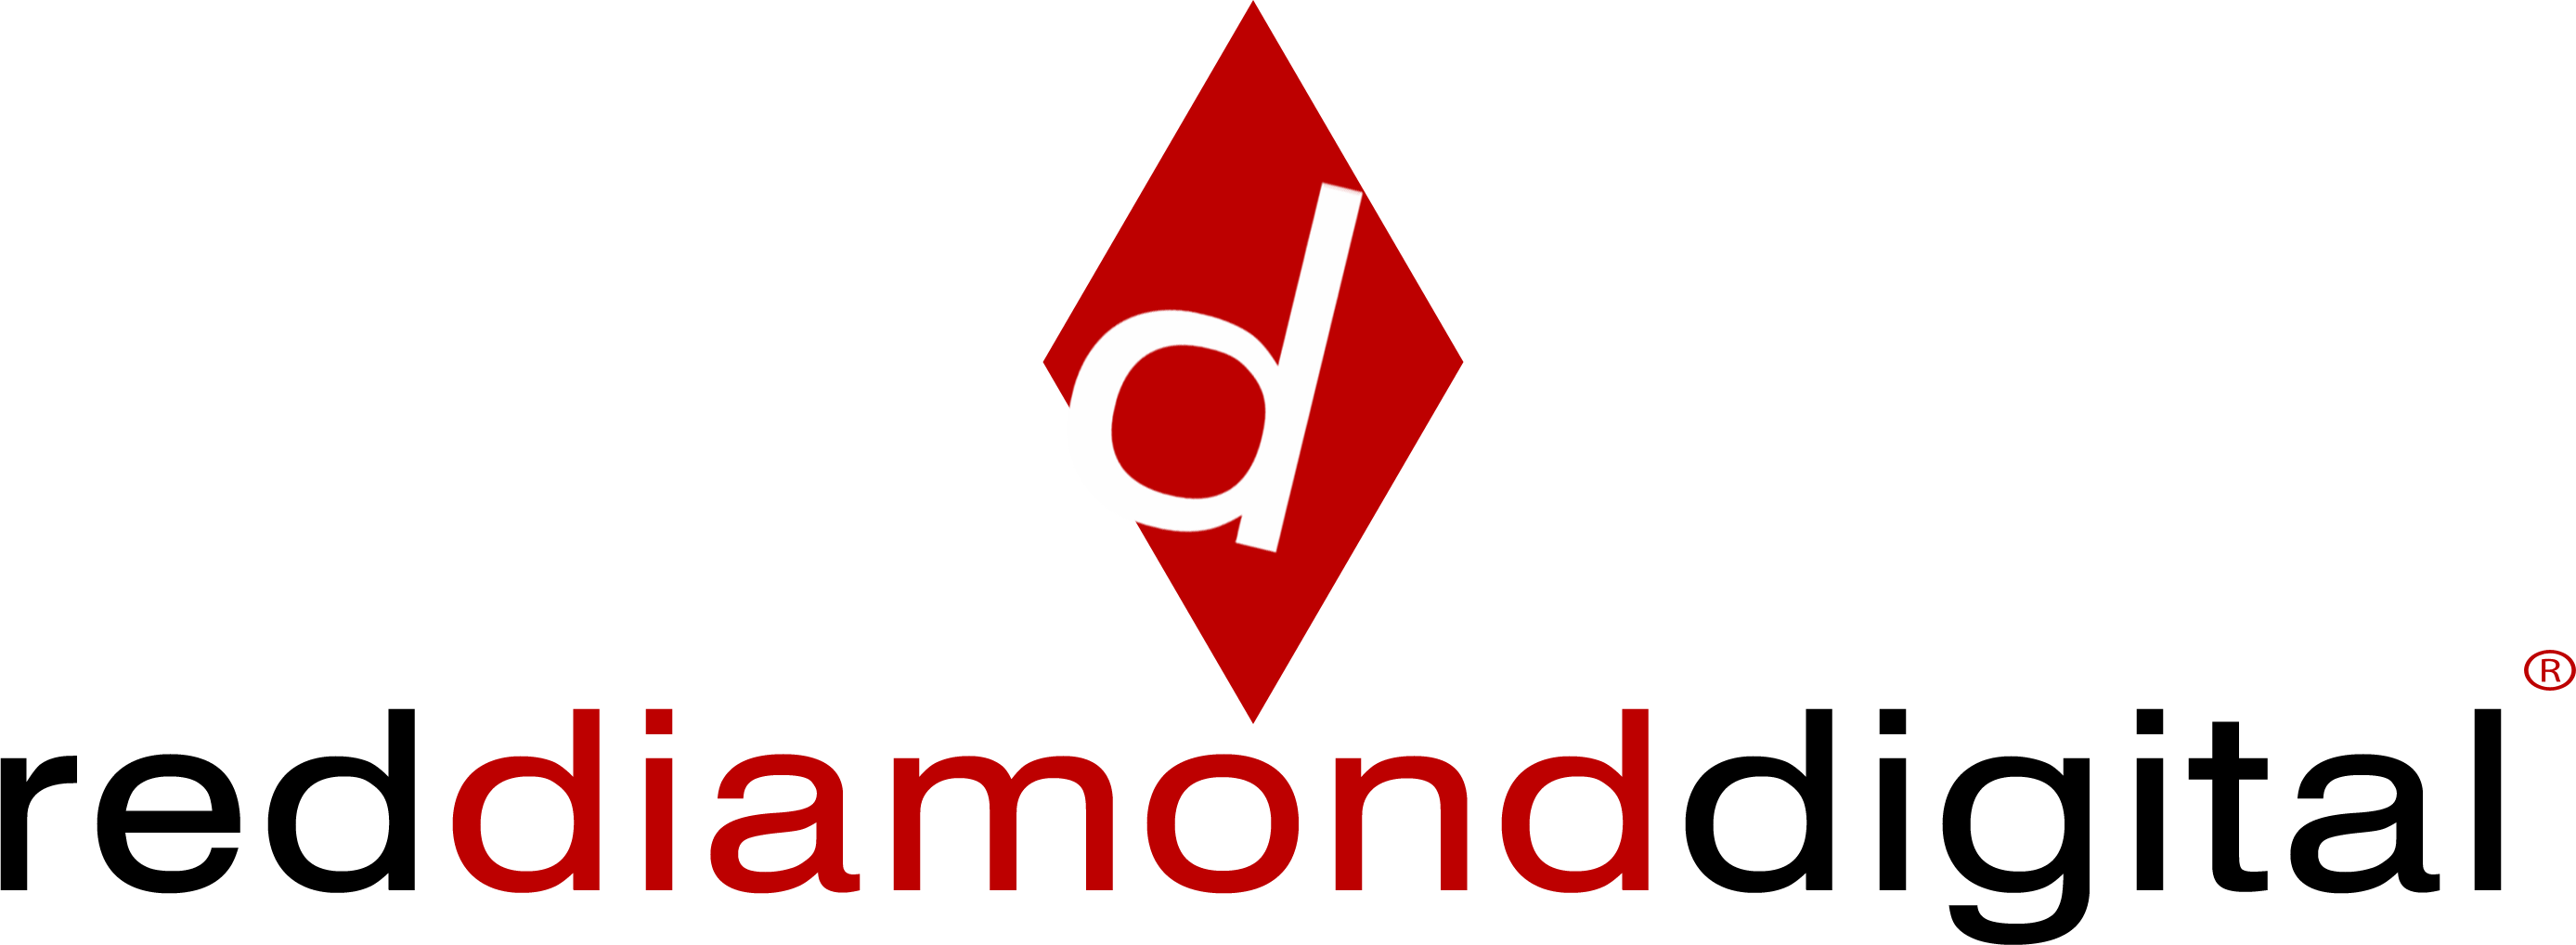 Red Diamond Logo - Red Diamond Digital - Web Design, Graphic Design, Printing ...